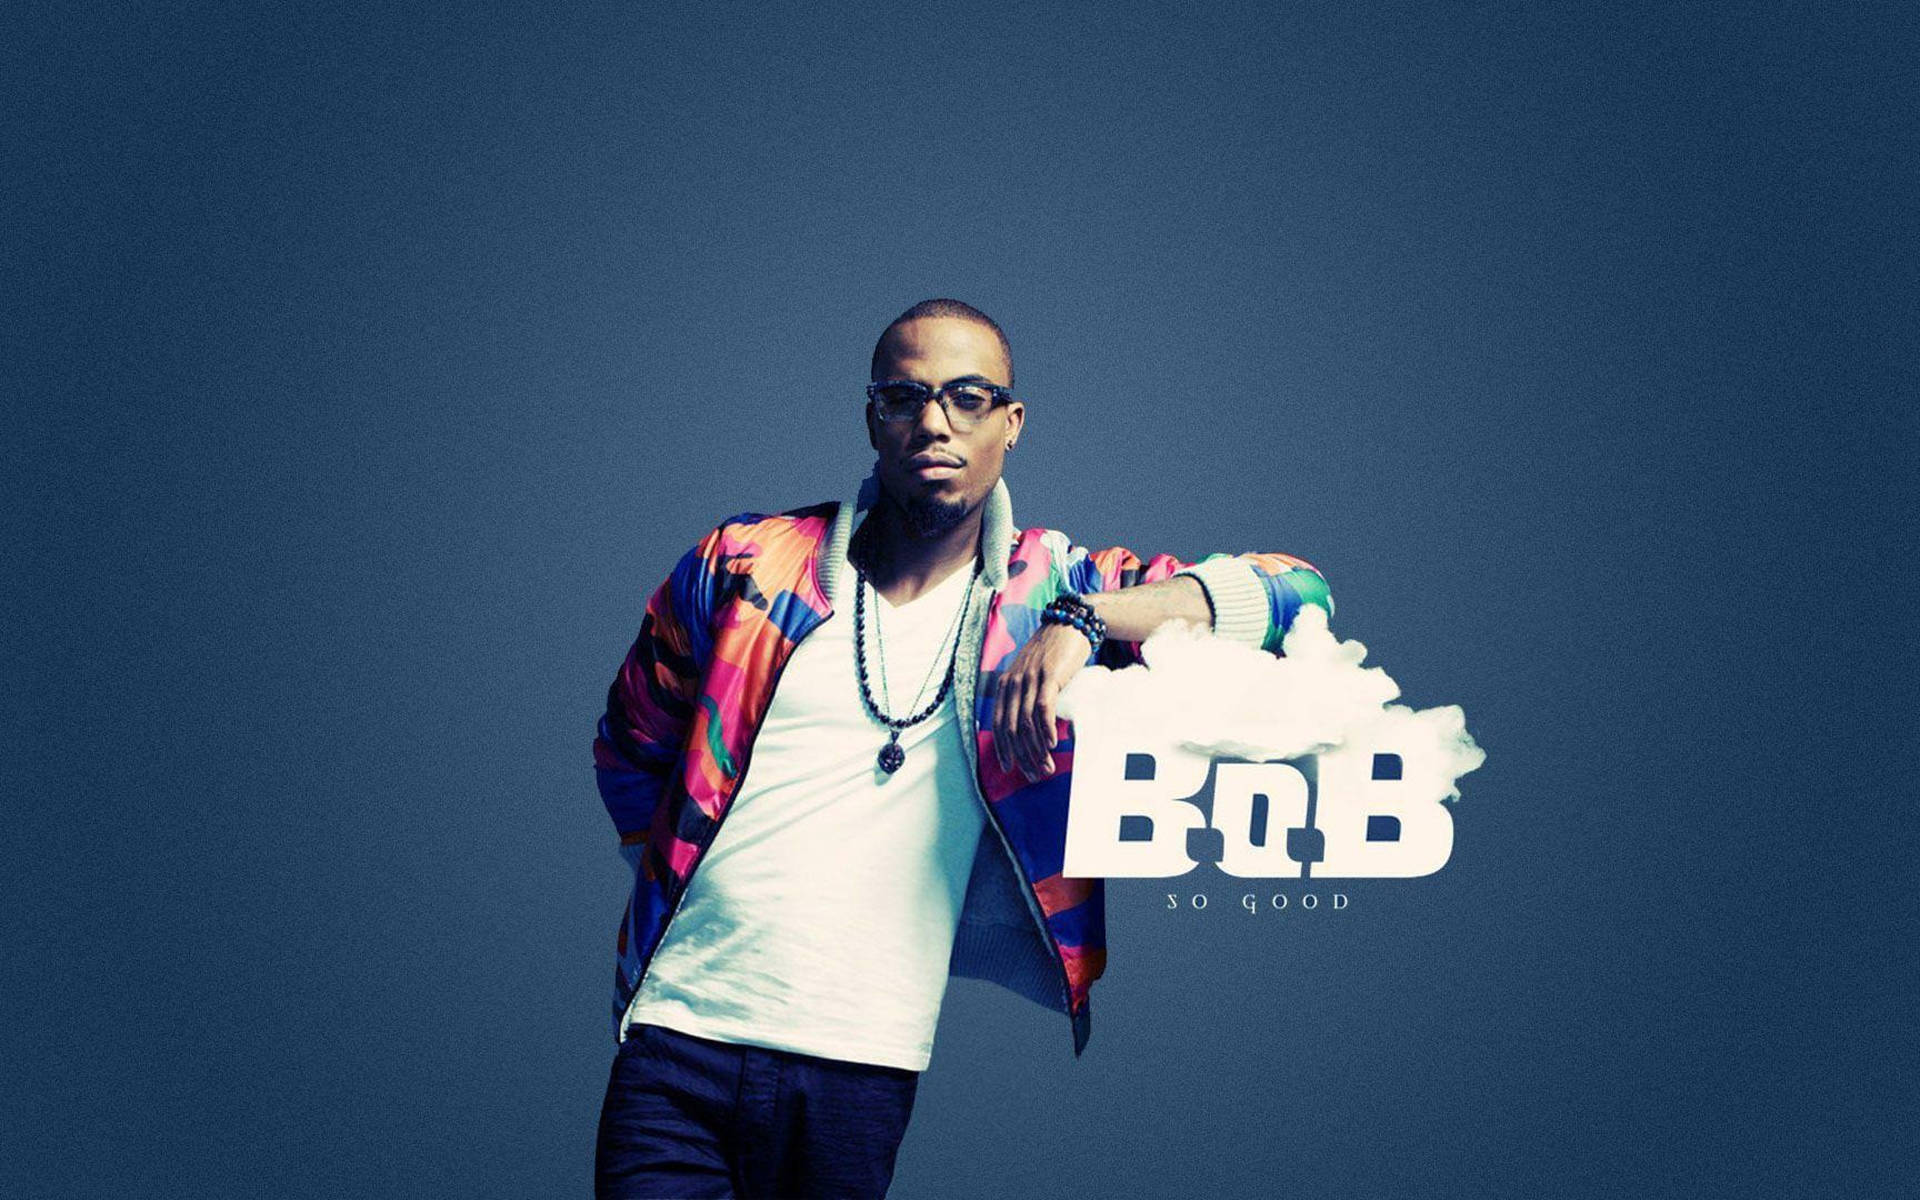 American Rapper B.o.b Background